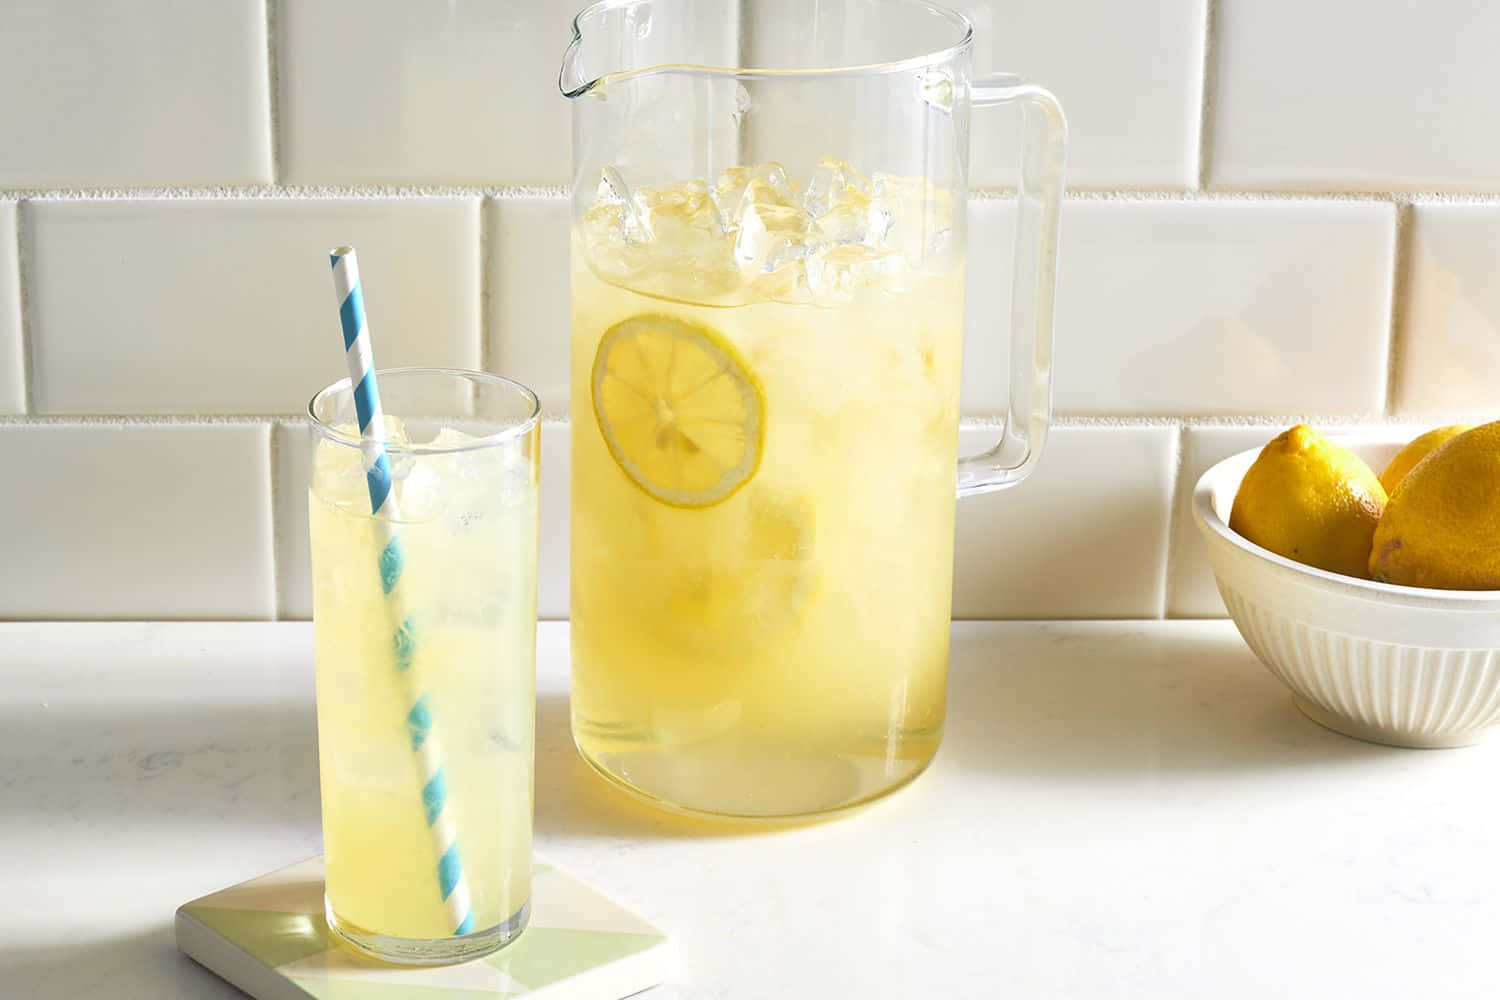 Lemonade Pitcher With Lemon Slices And A Glass Of Lemonade